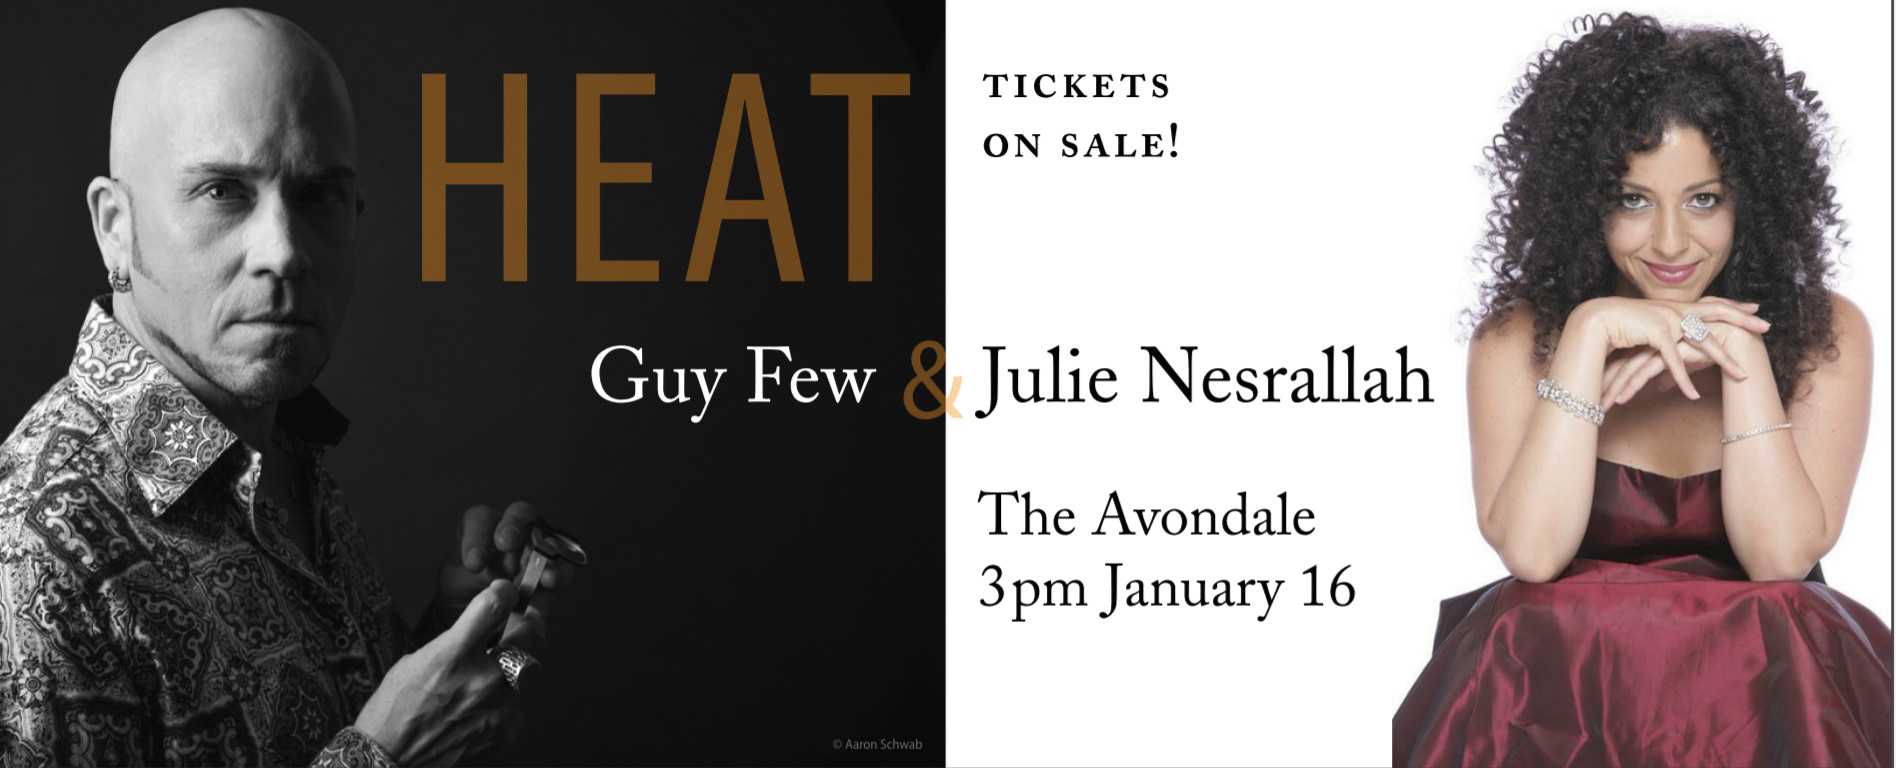 HEAT -  Julie Nesrallah and Guy Few